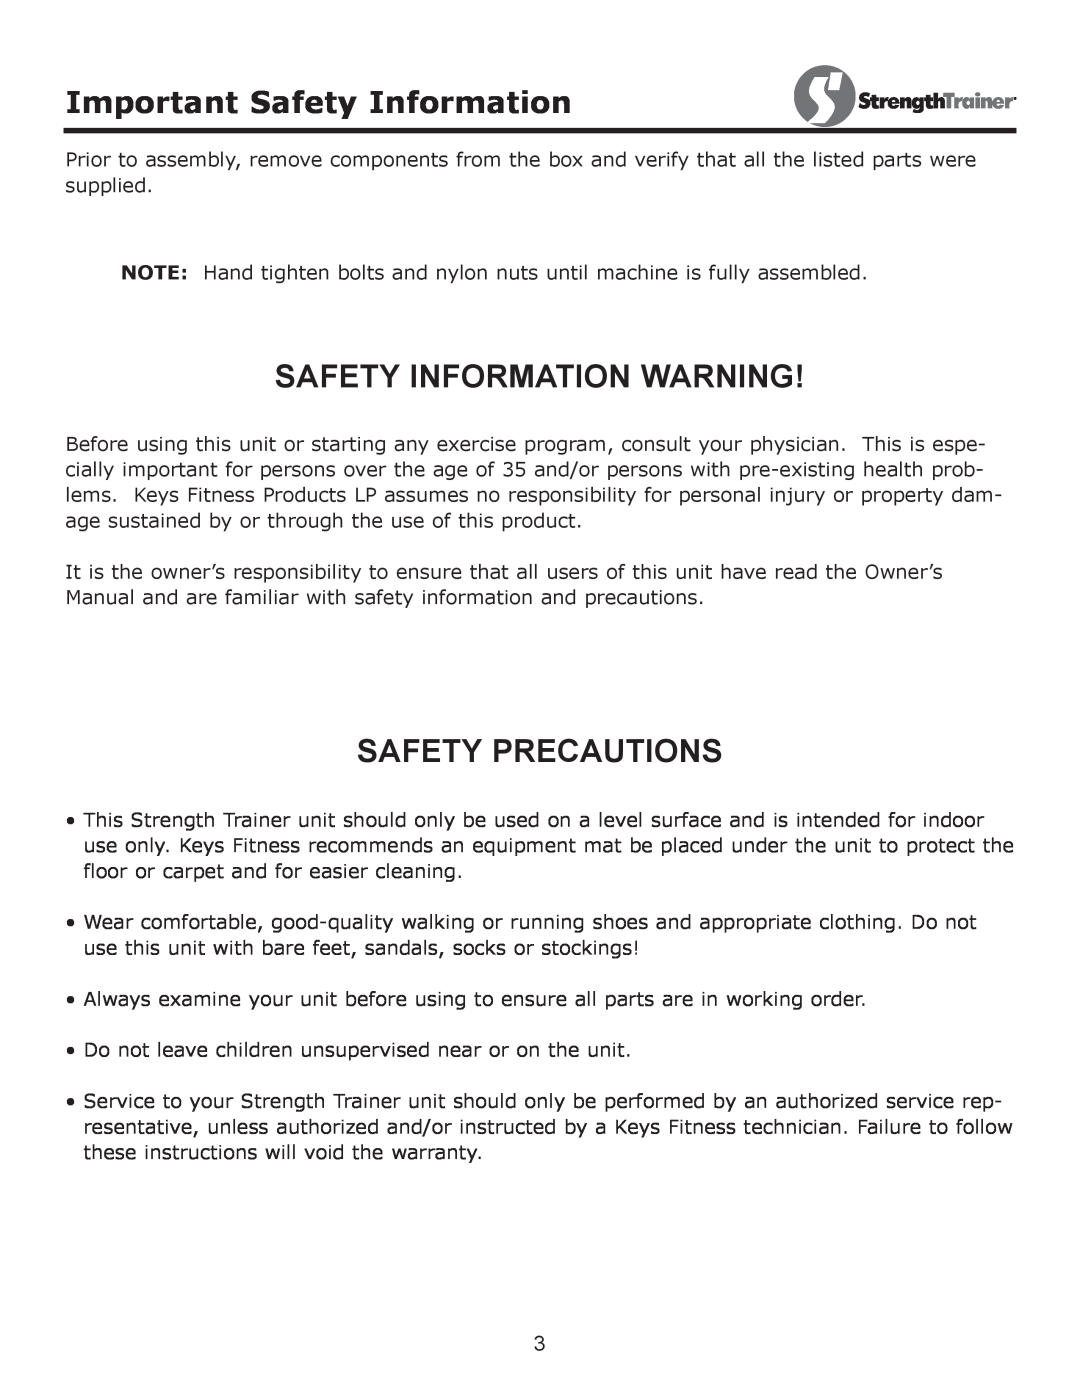 Keys Fitness ST-VDB owner manual Important Safety Information, Safety Information Warning, Safety Precautions 